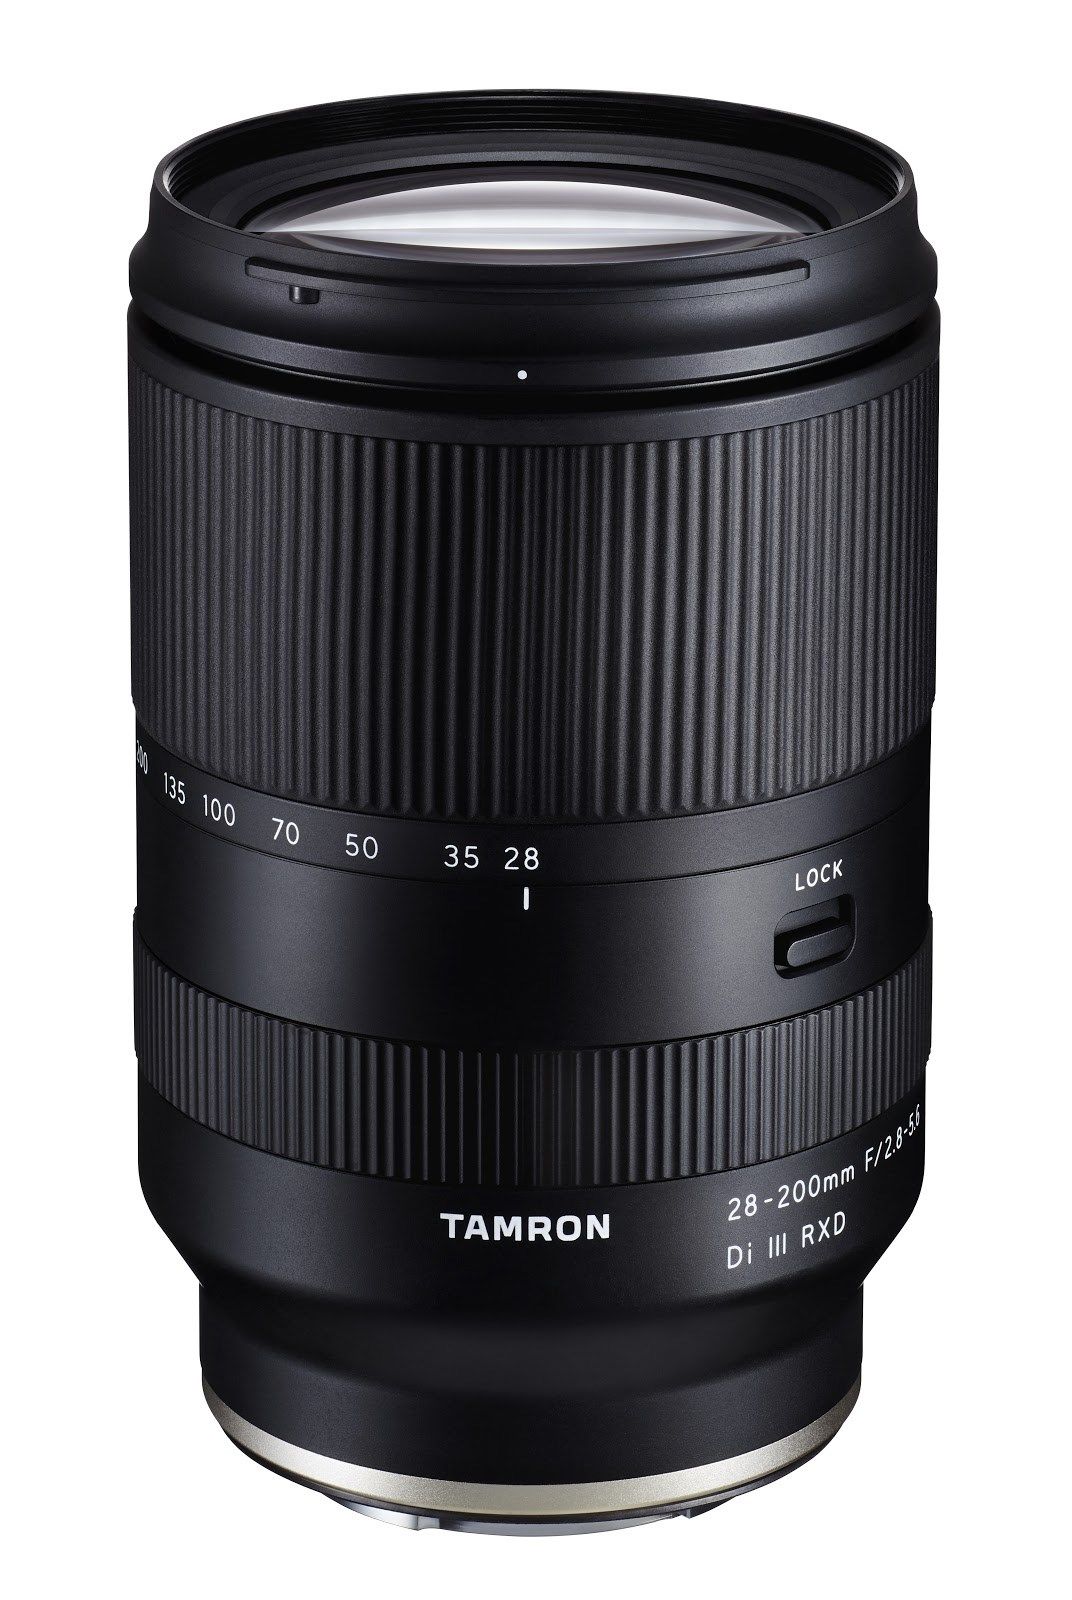 Tamron 28-200mm F2.8-5.6 Di III RXD Lens - Sony FE